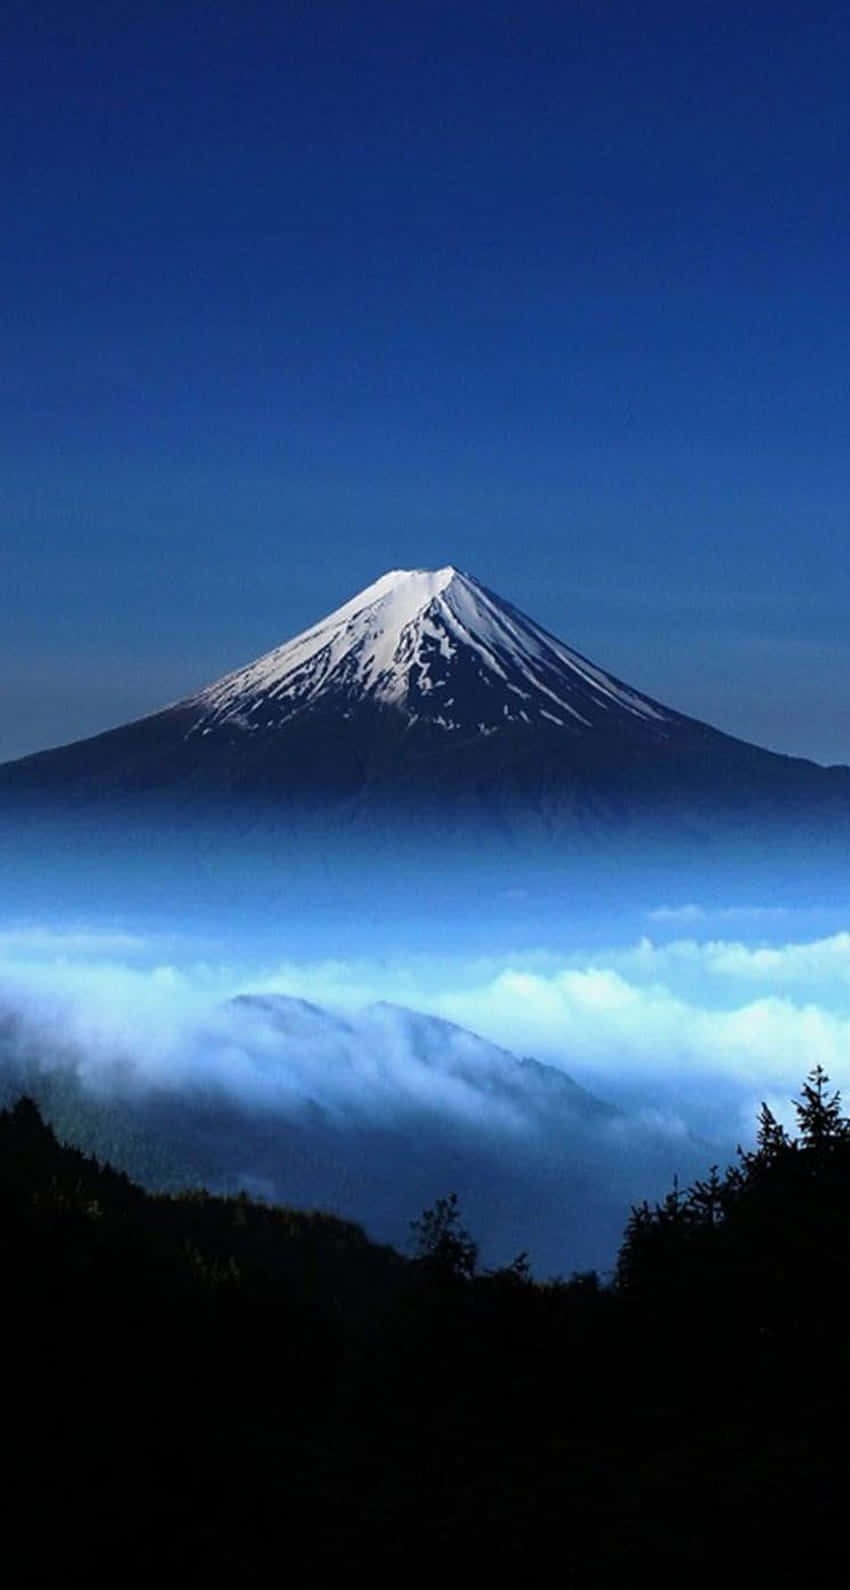 Sceneri fra Mount Fuji i Japan. Wallpaper